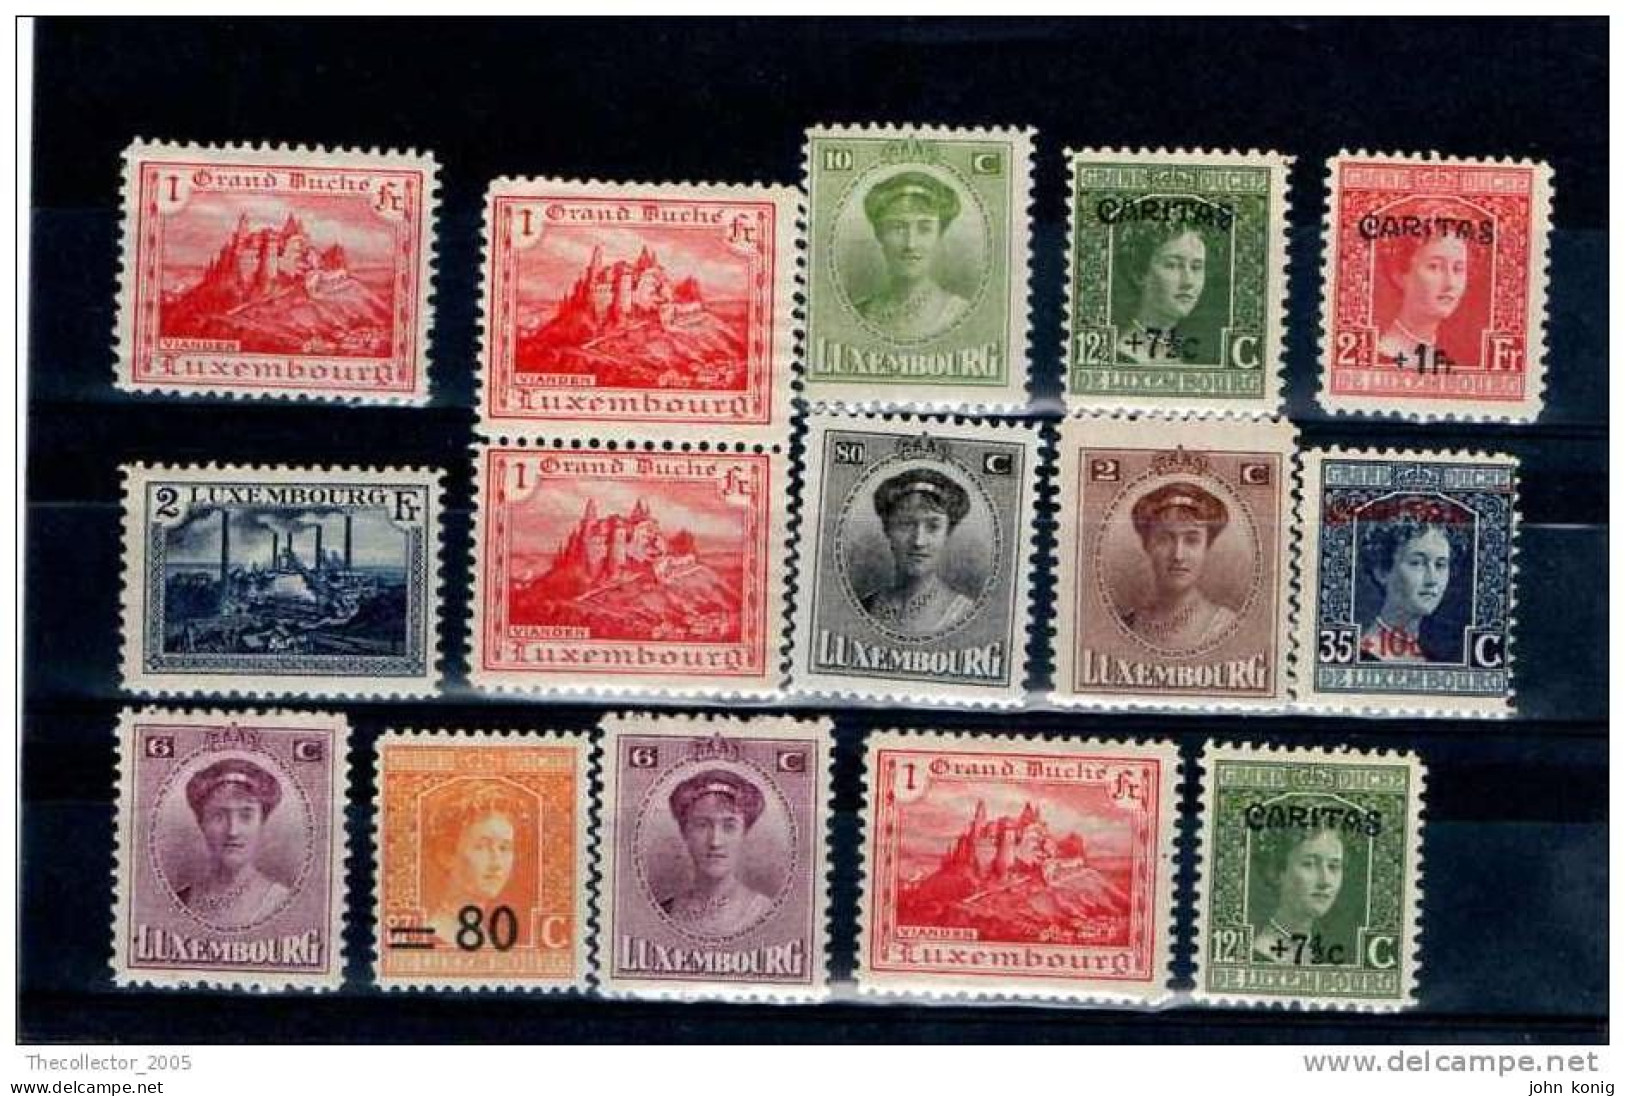 Luxembourg - Lussemburgo - Stamps Lot New-mint - Neue - Francobolli Lotto Nuovi (CARITAS) - Colecciones